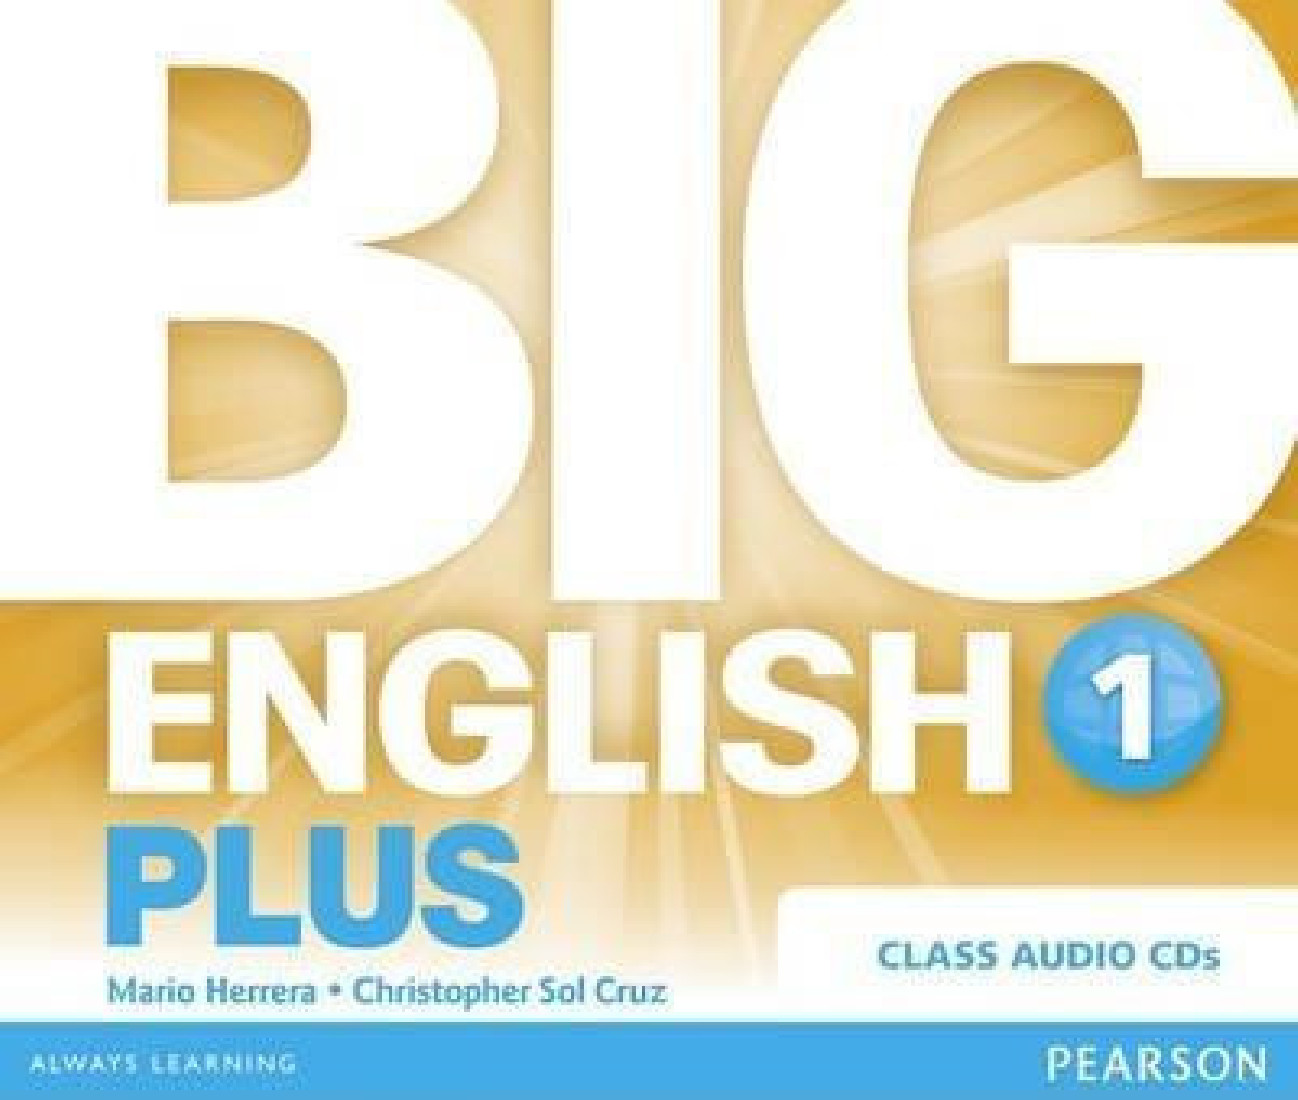 BIG ENGLISH PLUS 1 CD CLASS - BRE